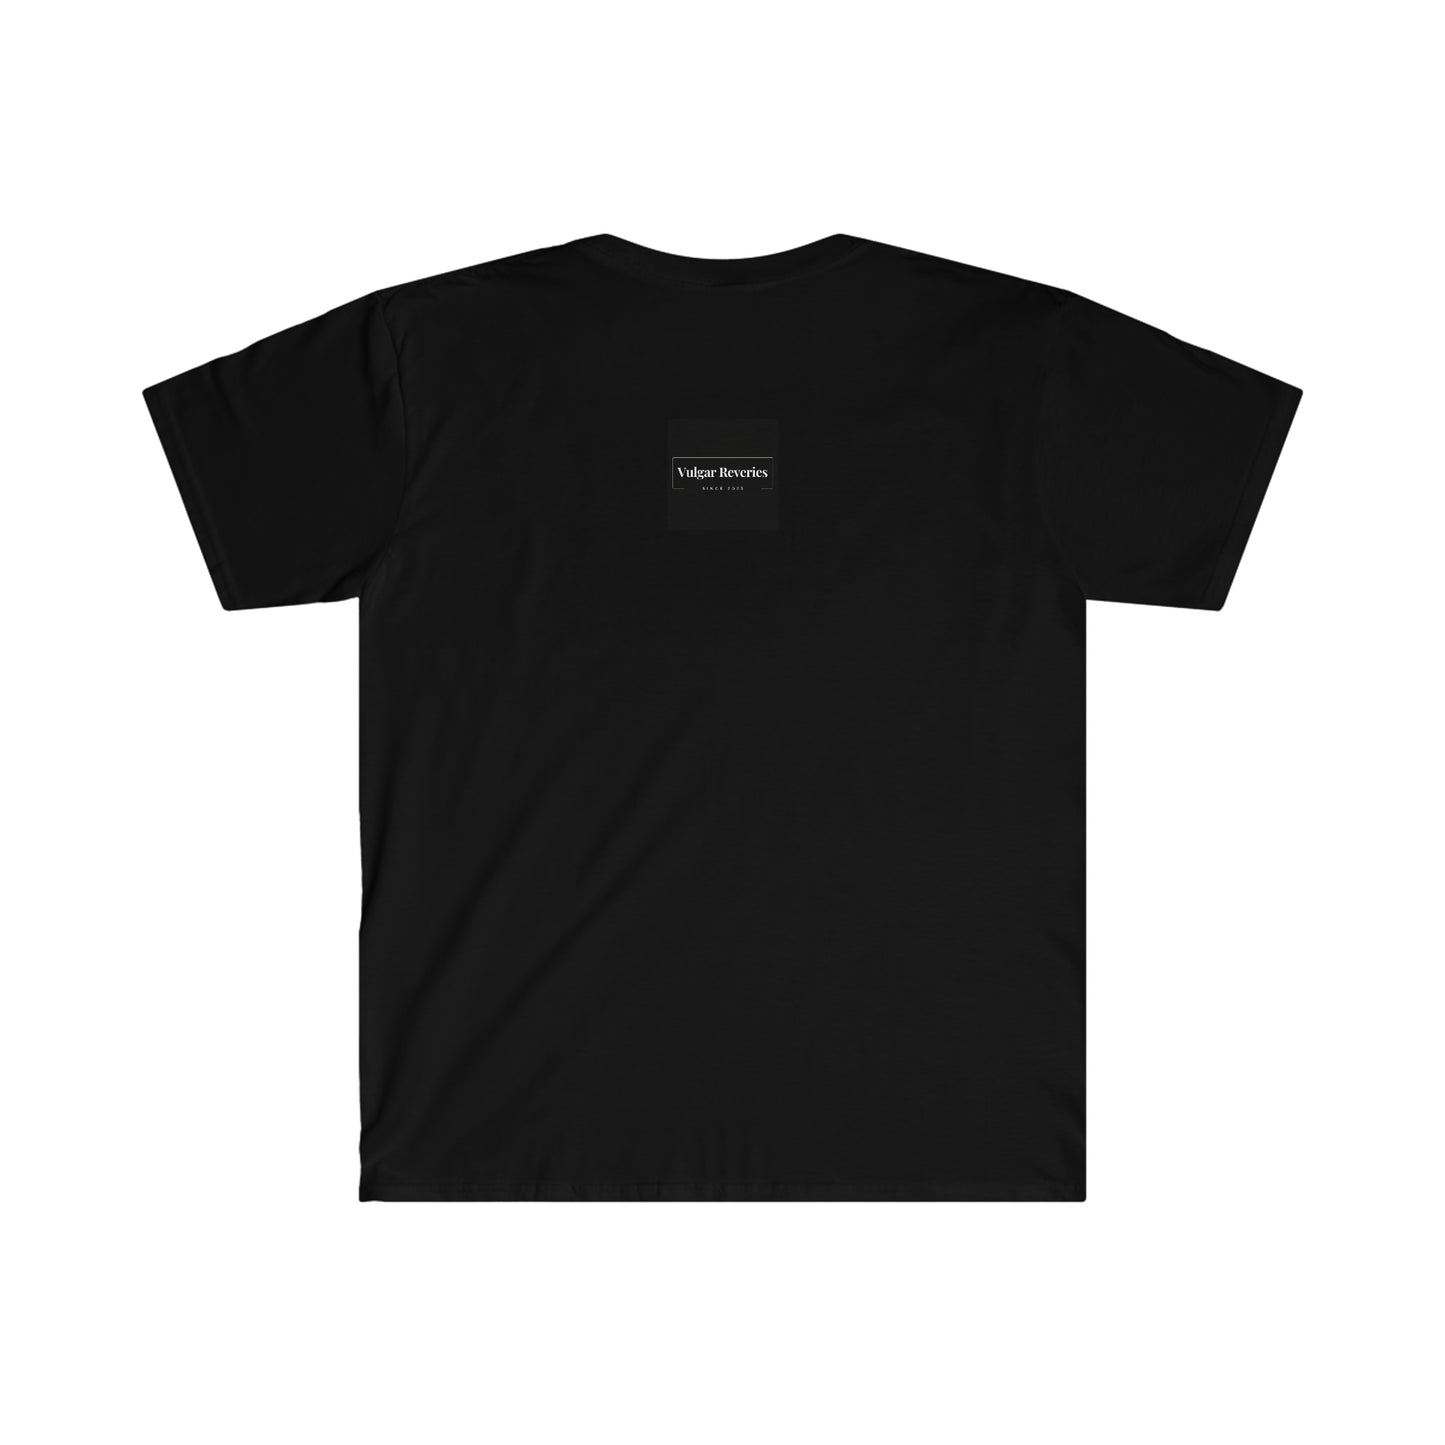 High Mutha Fuqin Five - Unisex Softstyle T-Shirt Blk